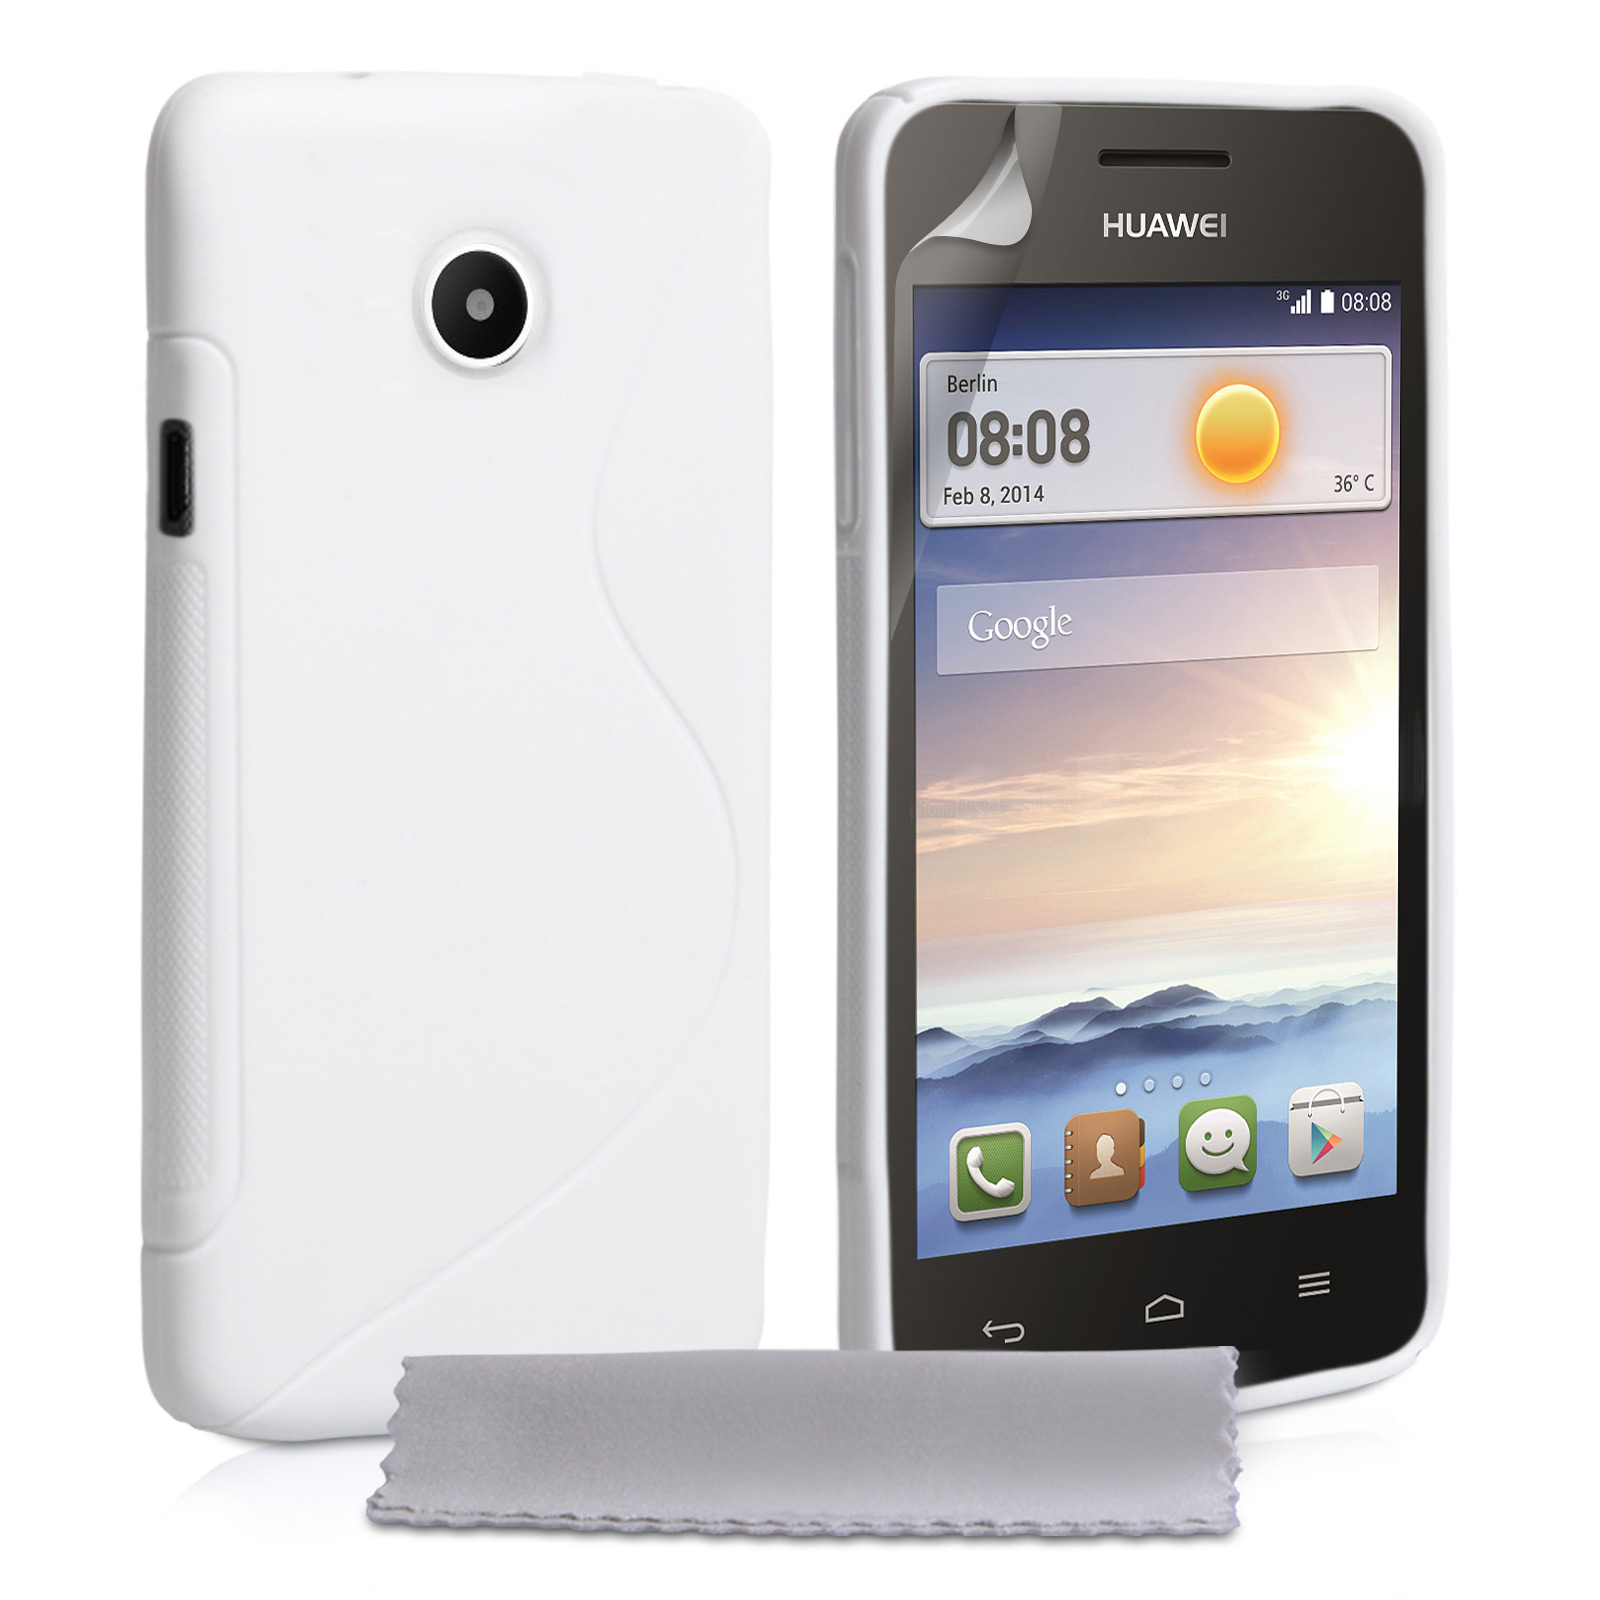 Caseflex Huawei Ascend Y330 Silicone Gel S-Line Case - White